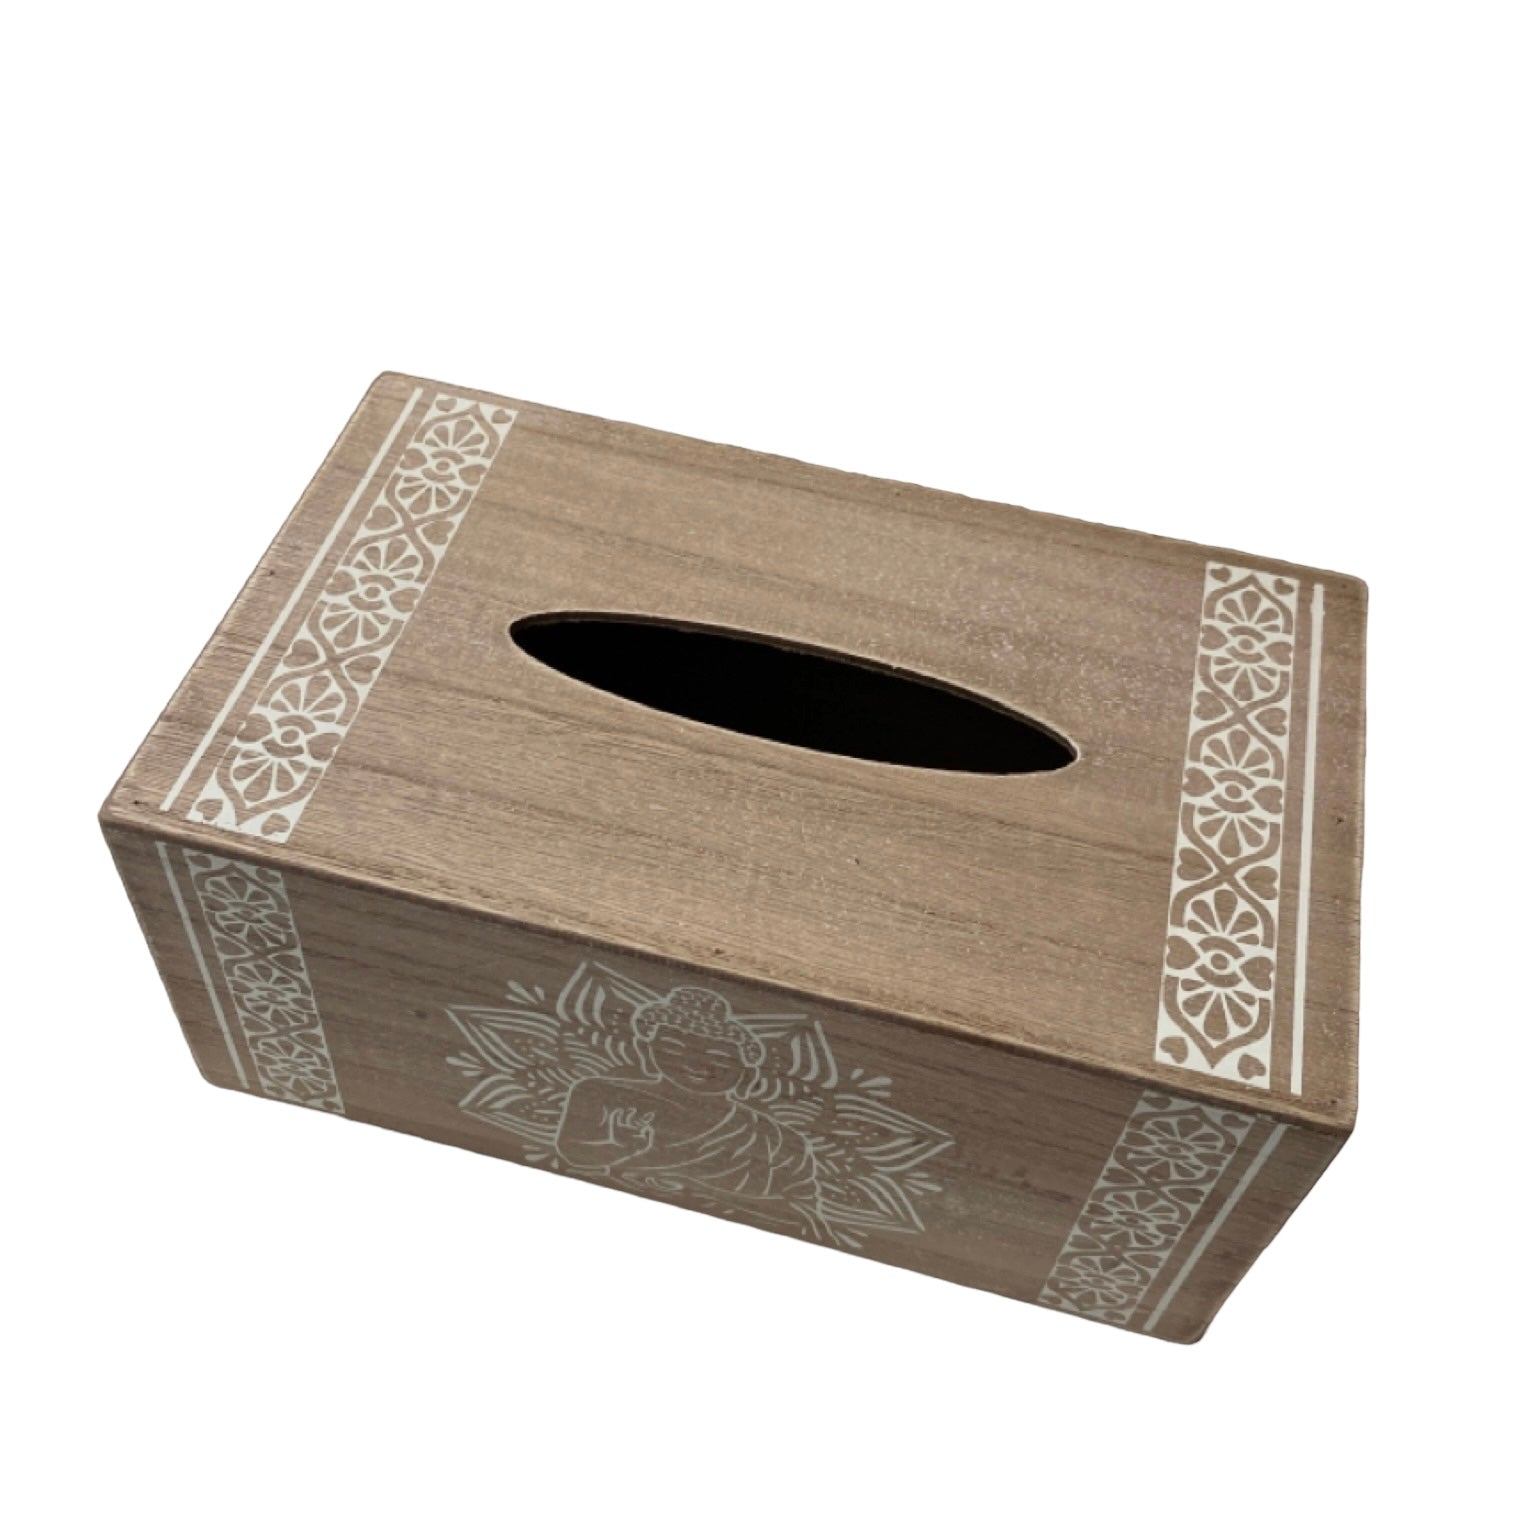 Tissue Box Lotus Buddha - The Renmy Store Homewares & Gifts 